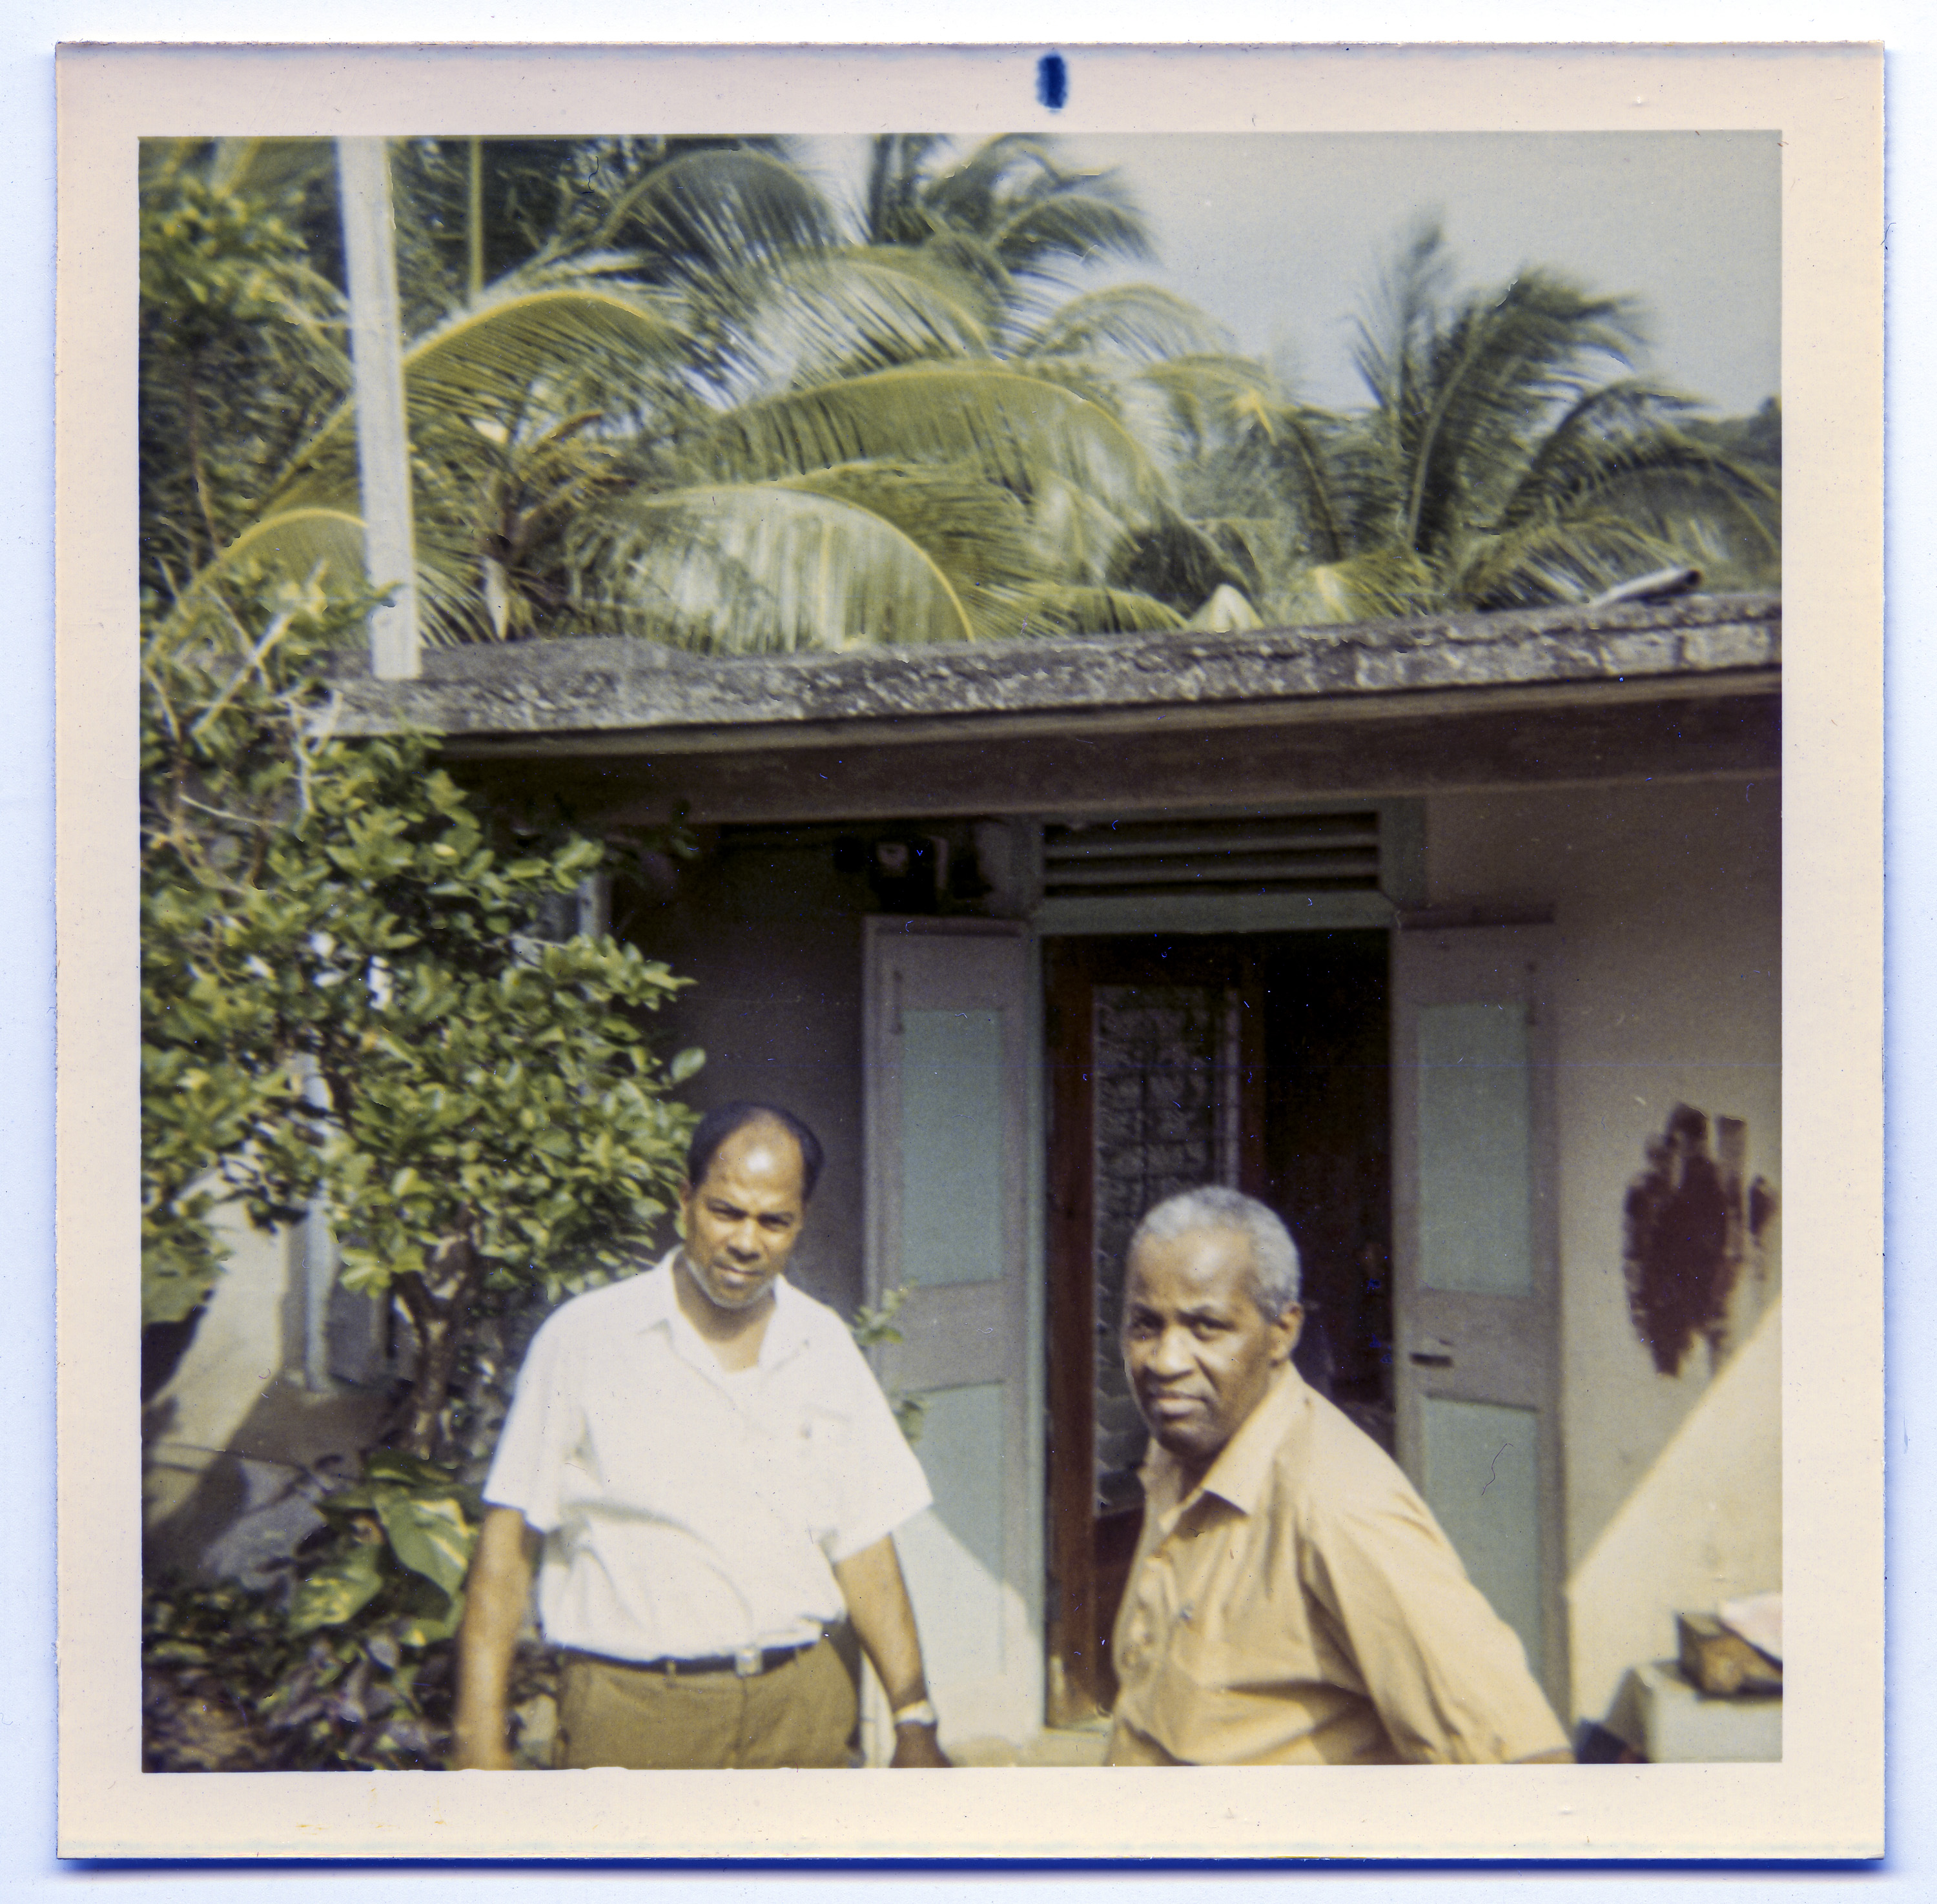 Aubrey (right) and relative in Montserrat, 1970s.